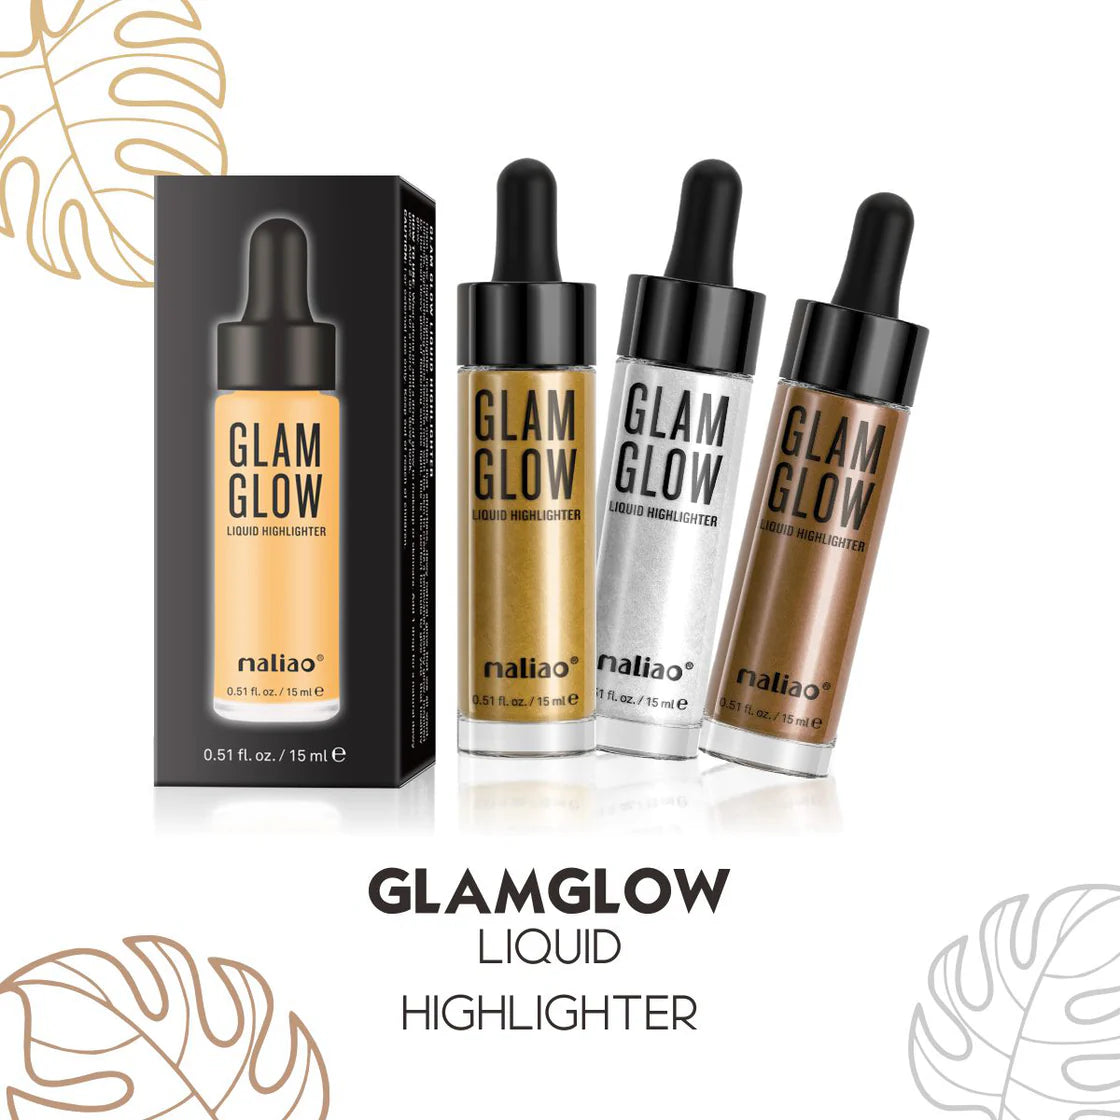 Maliao Glam Glow Liquid Highlighter